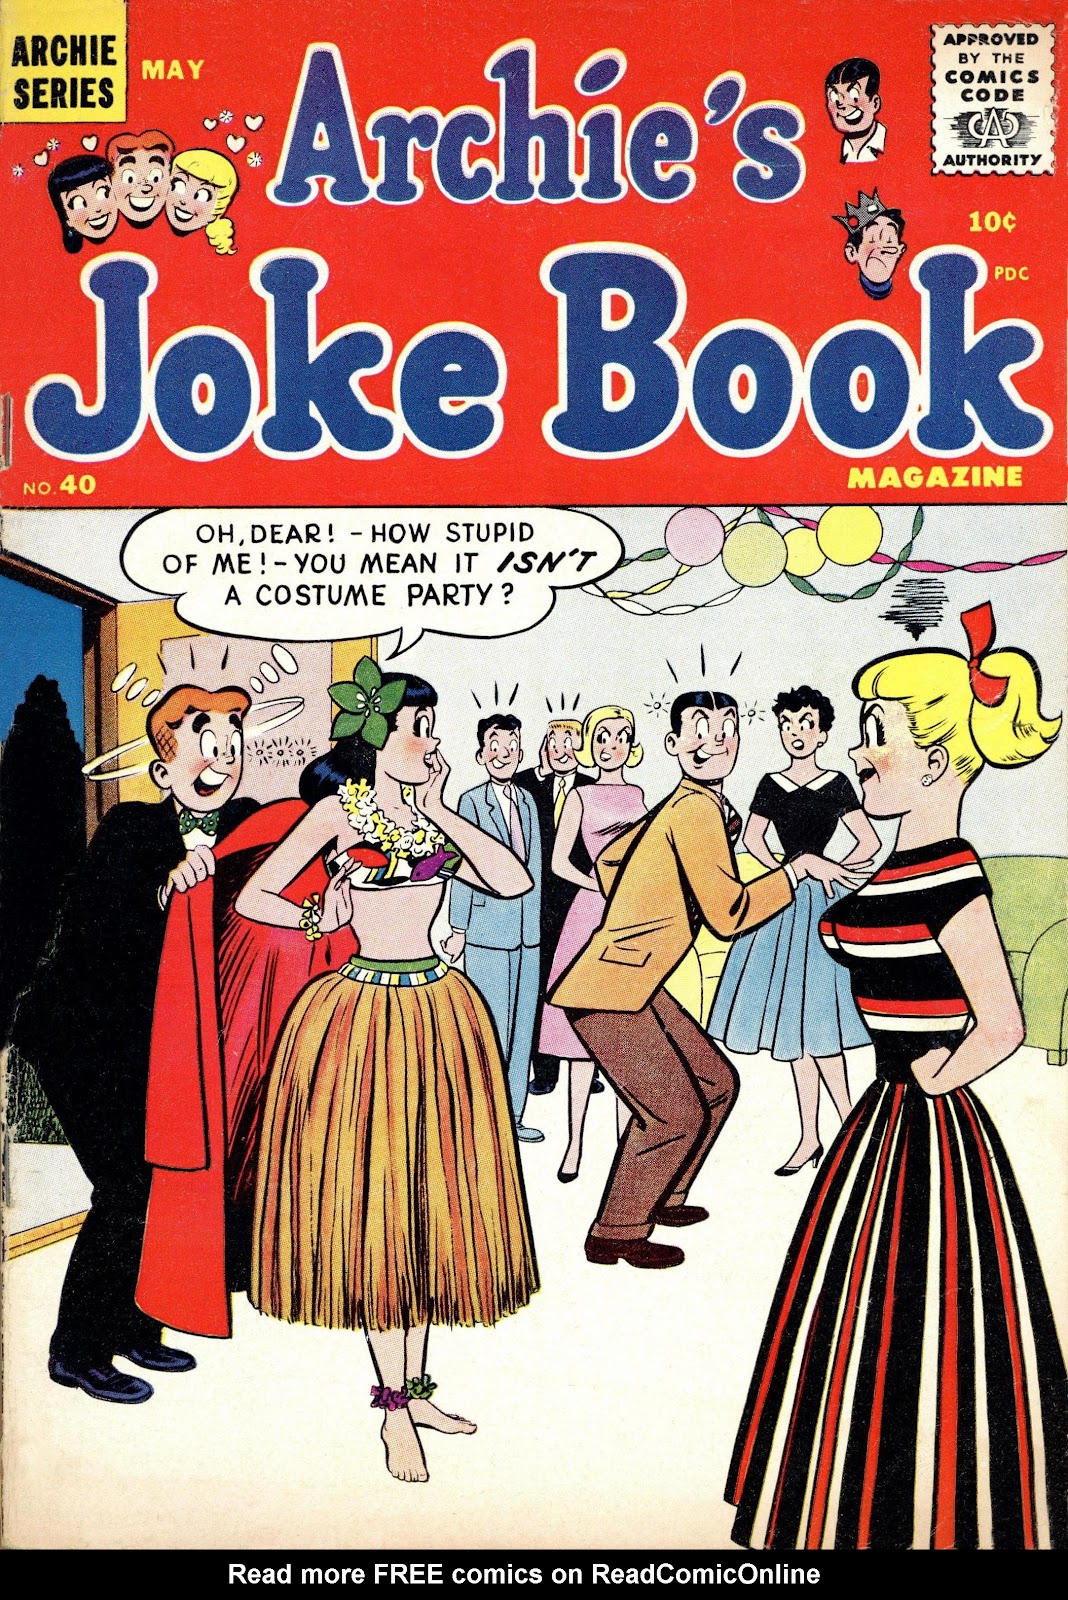 Archie's Joke Book Magazine issue 40 - Page 1